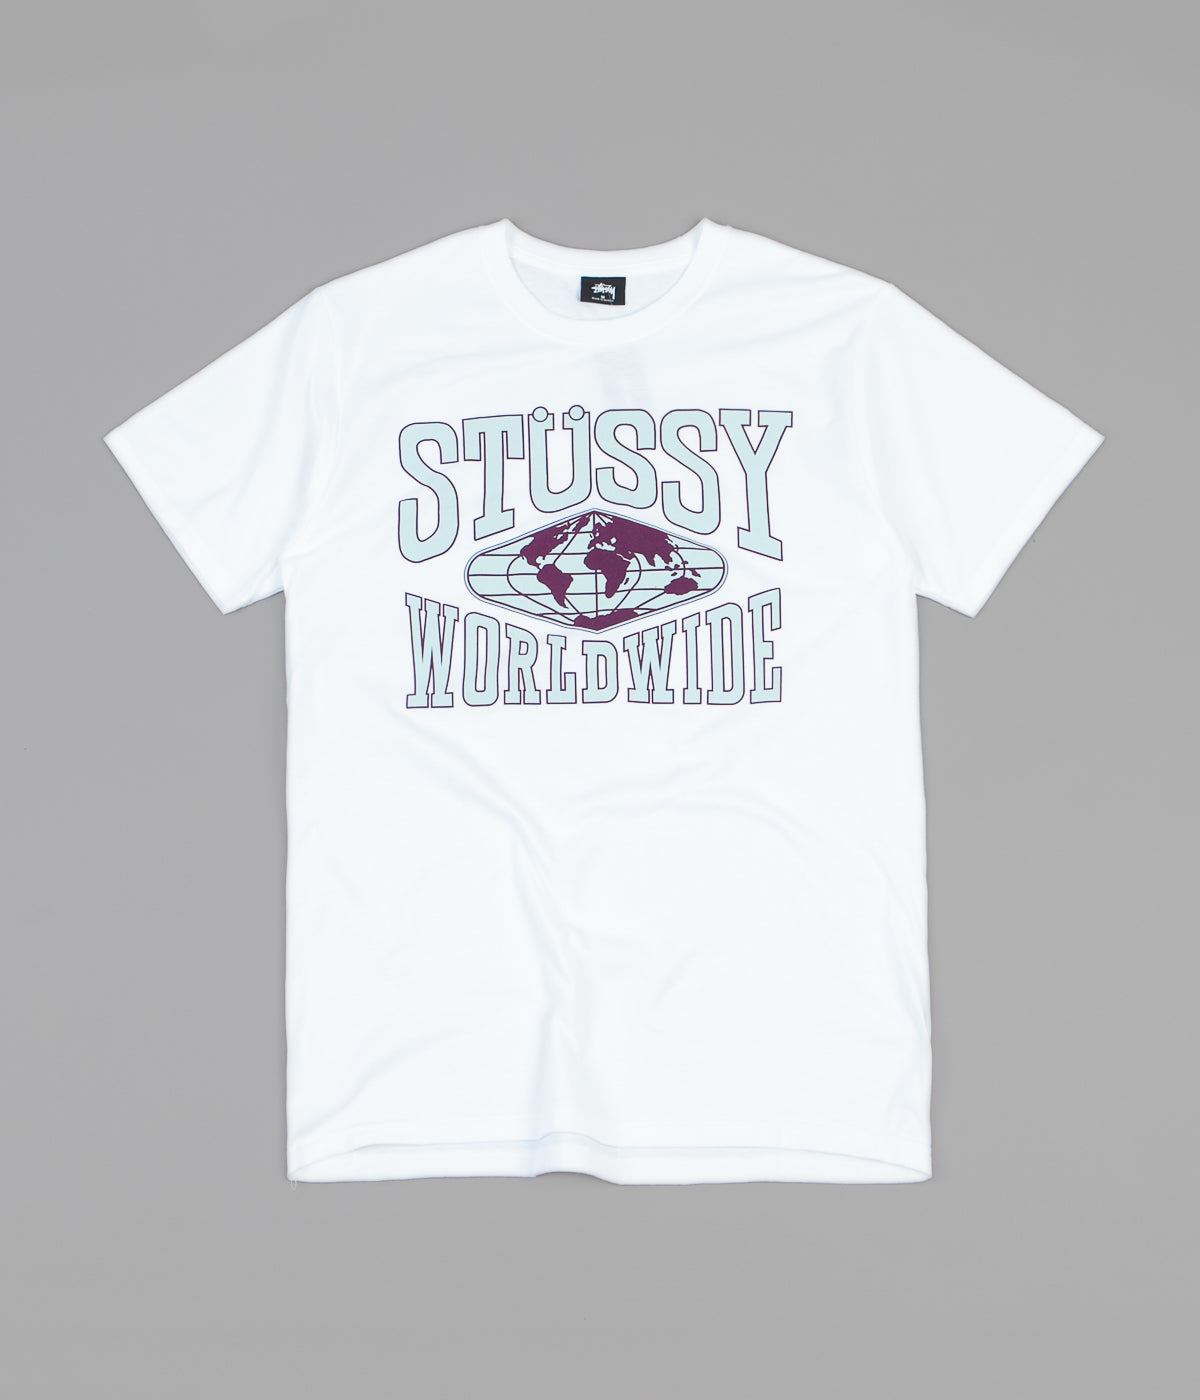 Stussy Worldwide T-Shirt - White | Flatspot